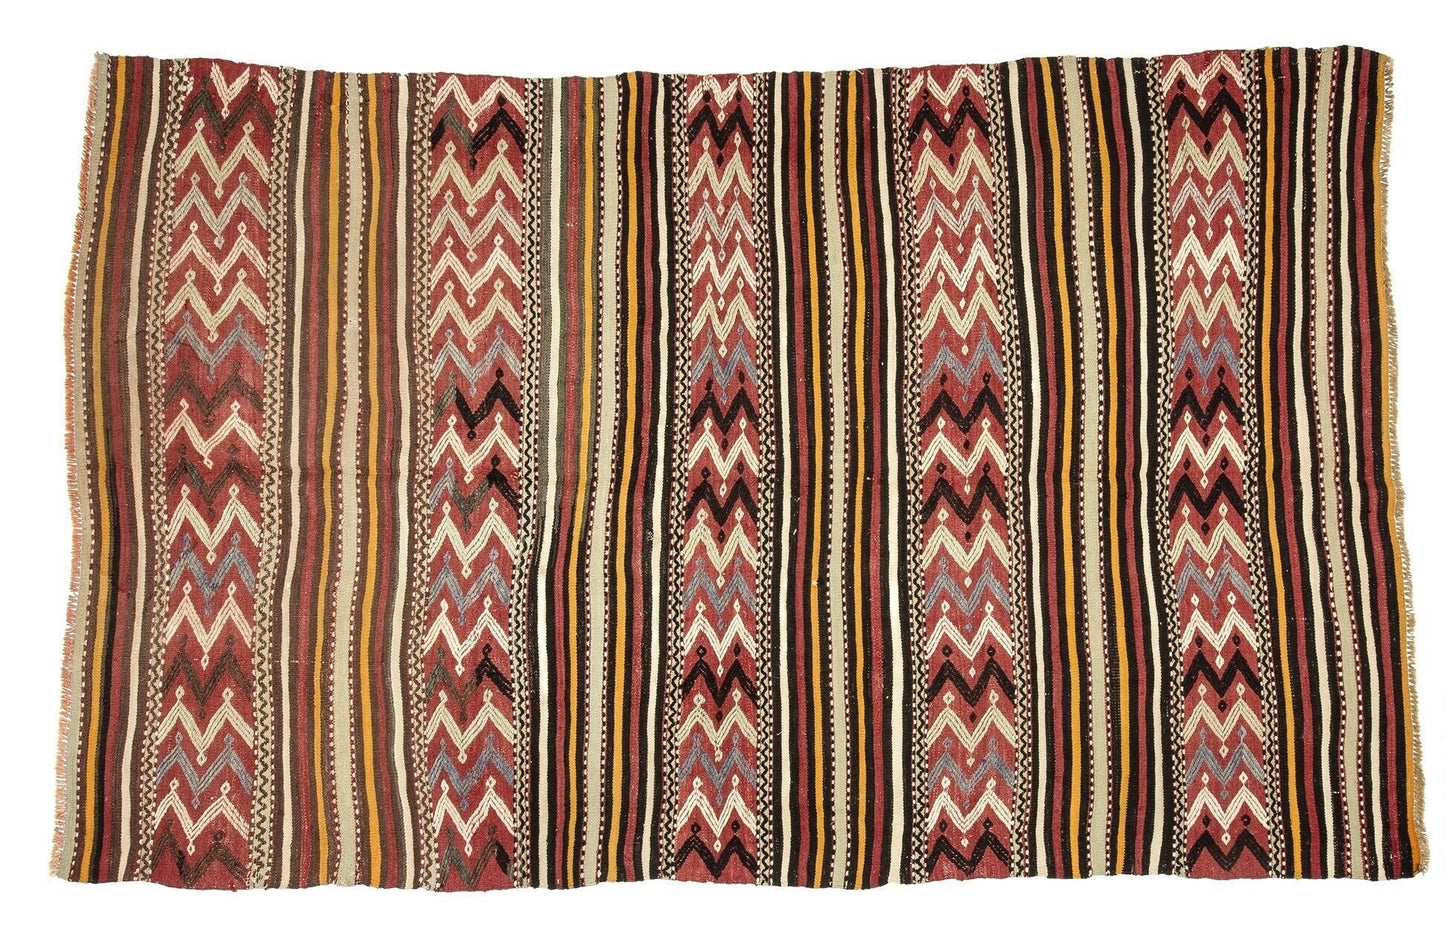 Vintage Kilim Rug, Faded Rug, Turkish Rug Kilim 5x8, Anatolia rug, Unique rug, Tribal rug,Rustic rug,Living room rug,One of a kind rug,2540